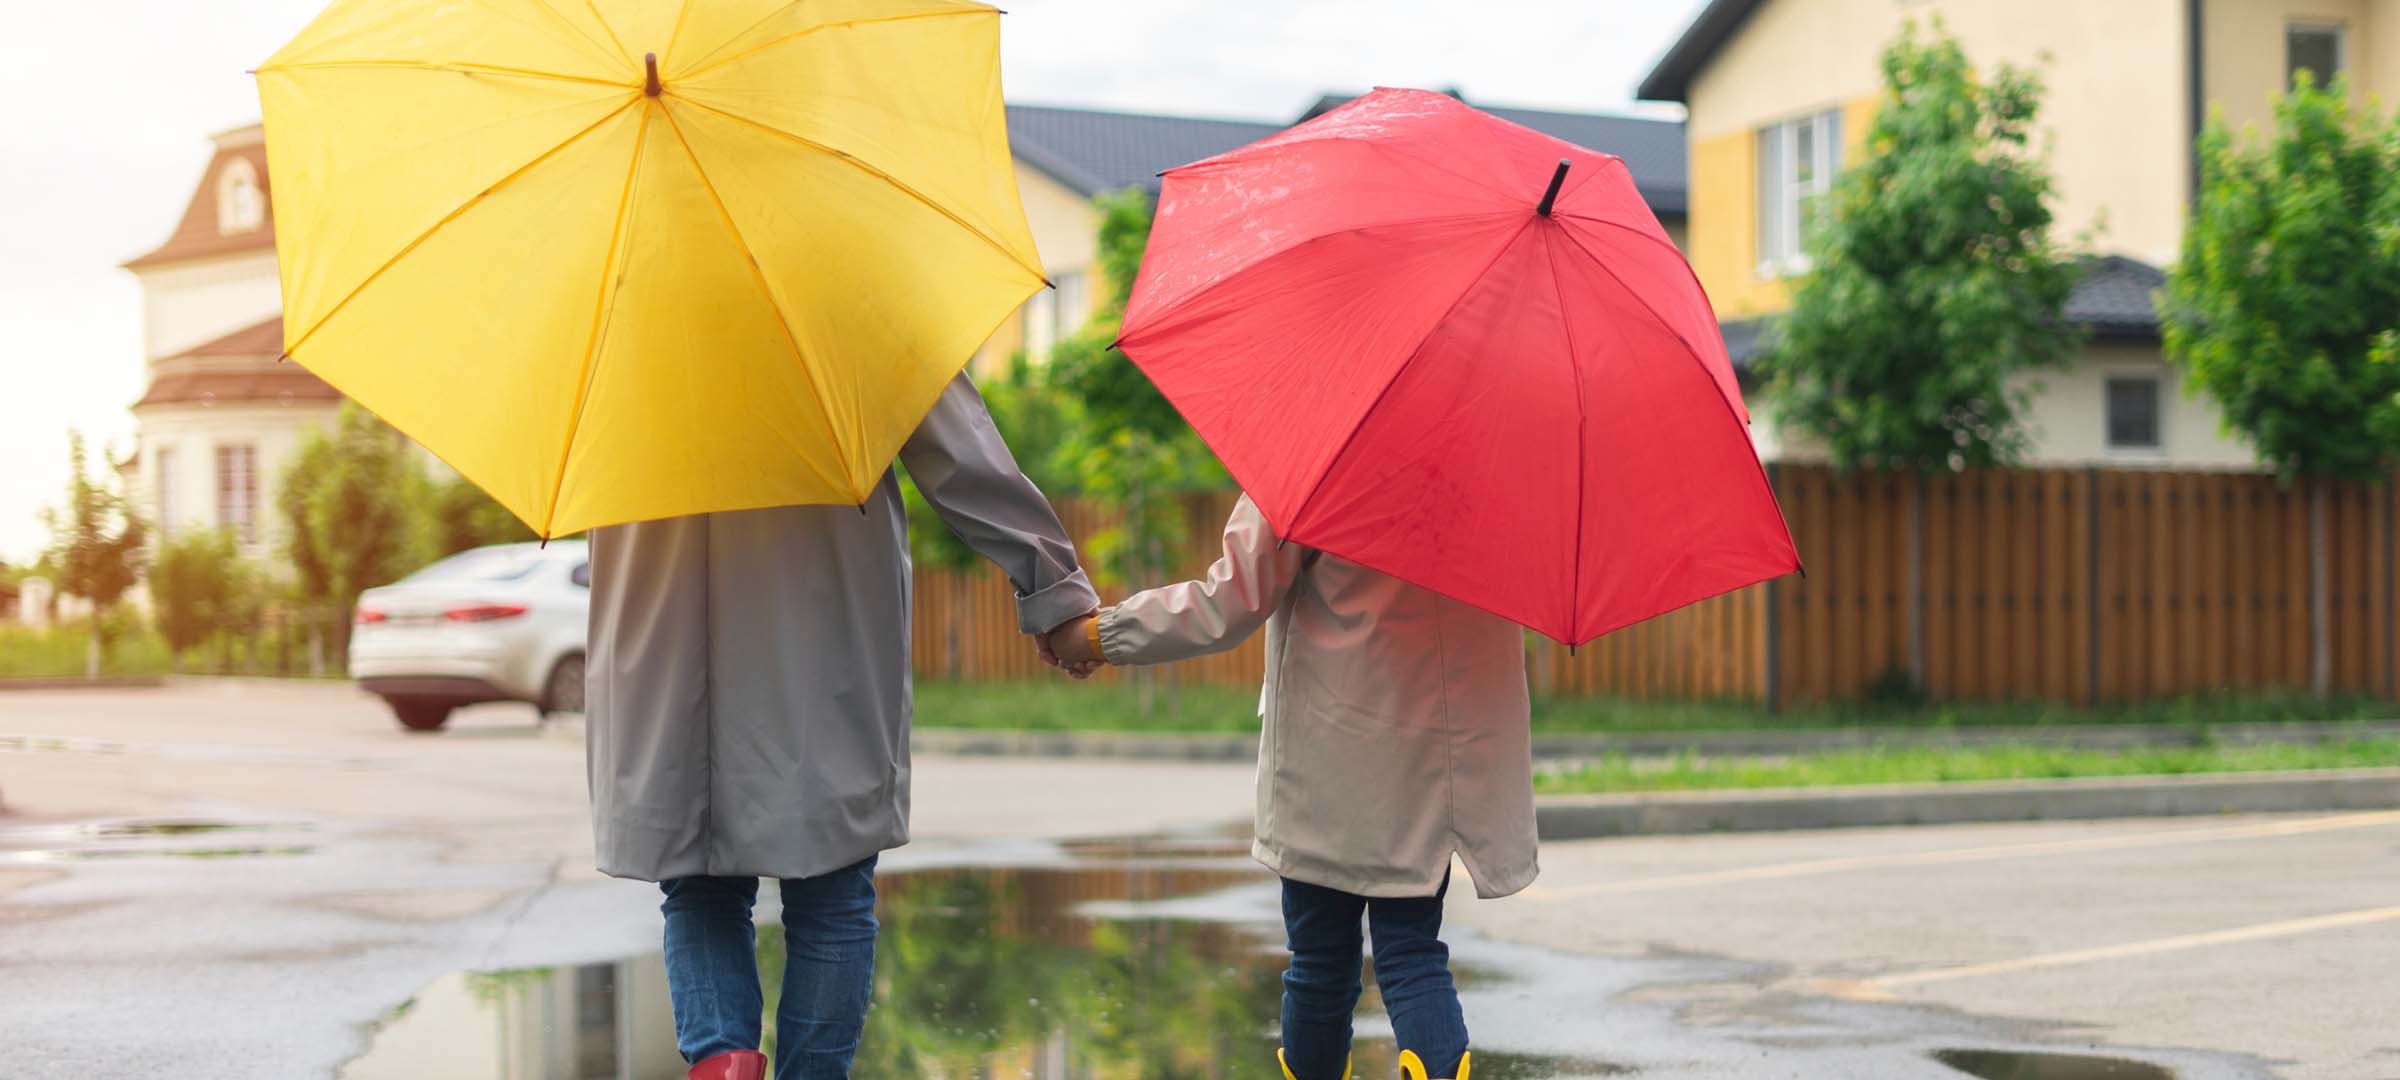 2 people walking with umbrella